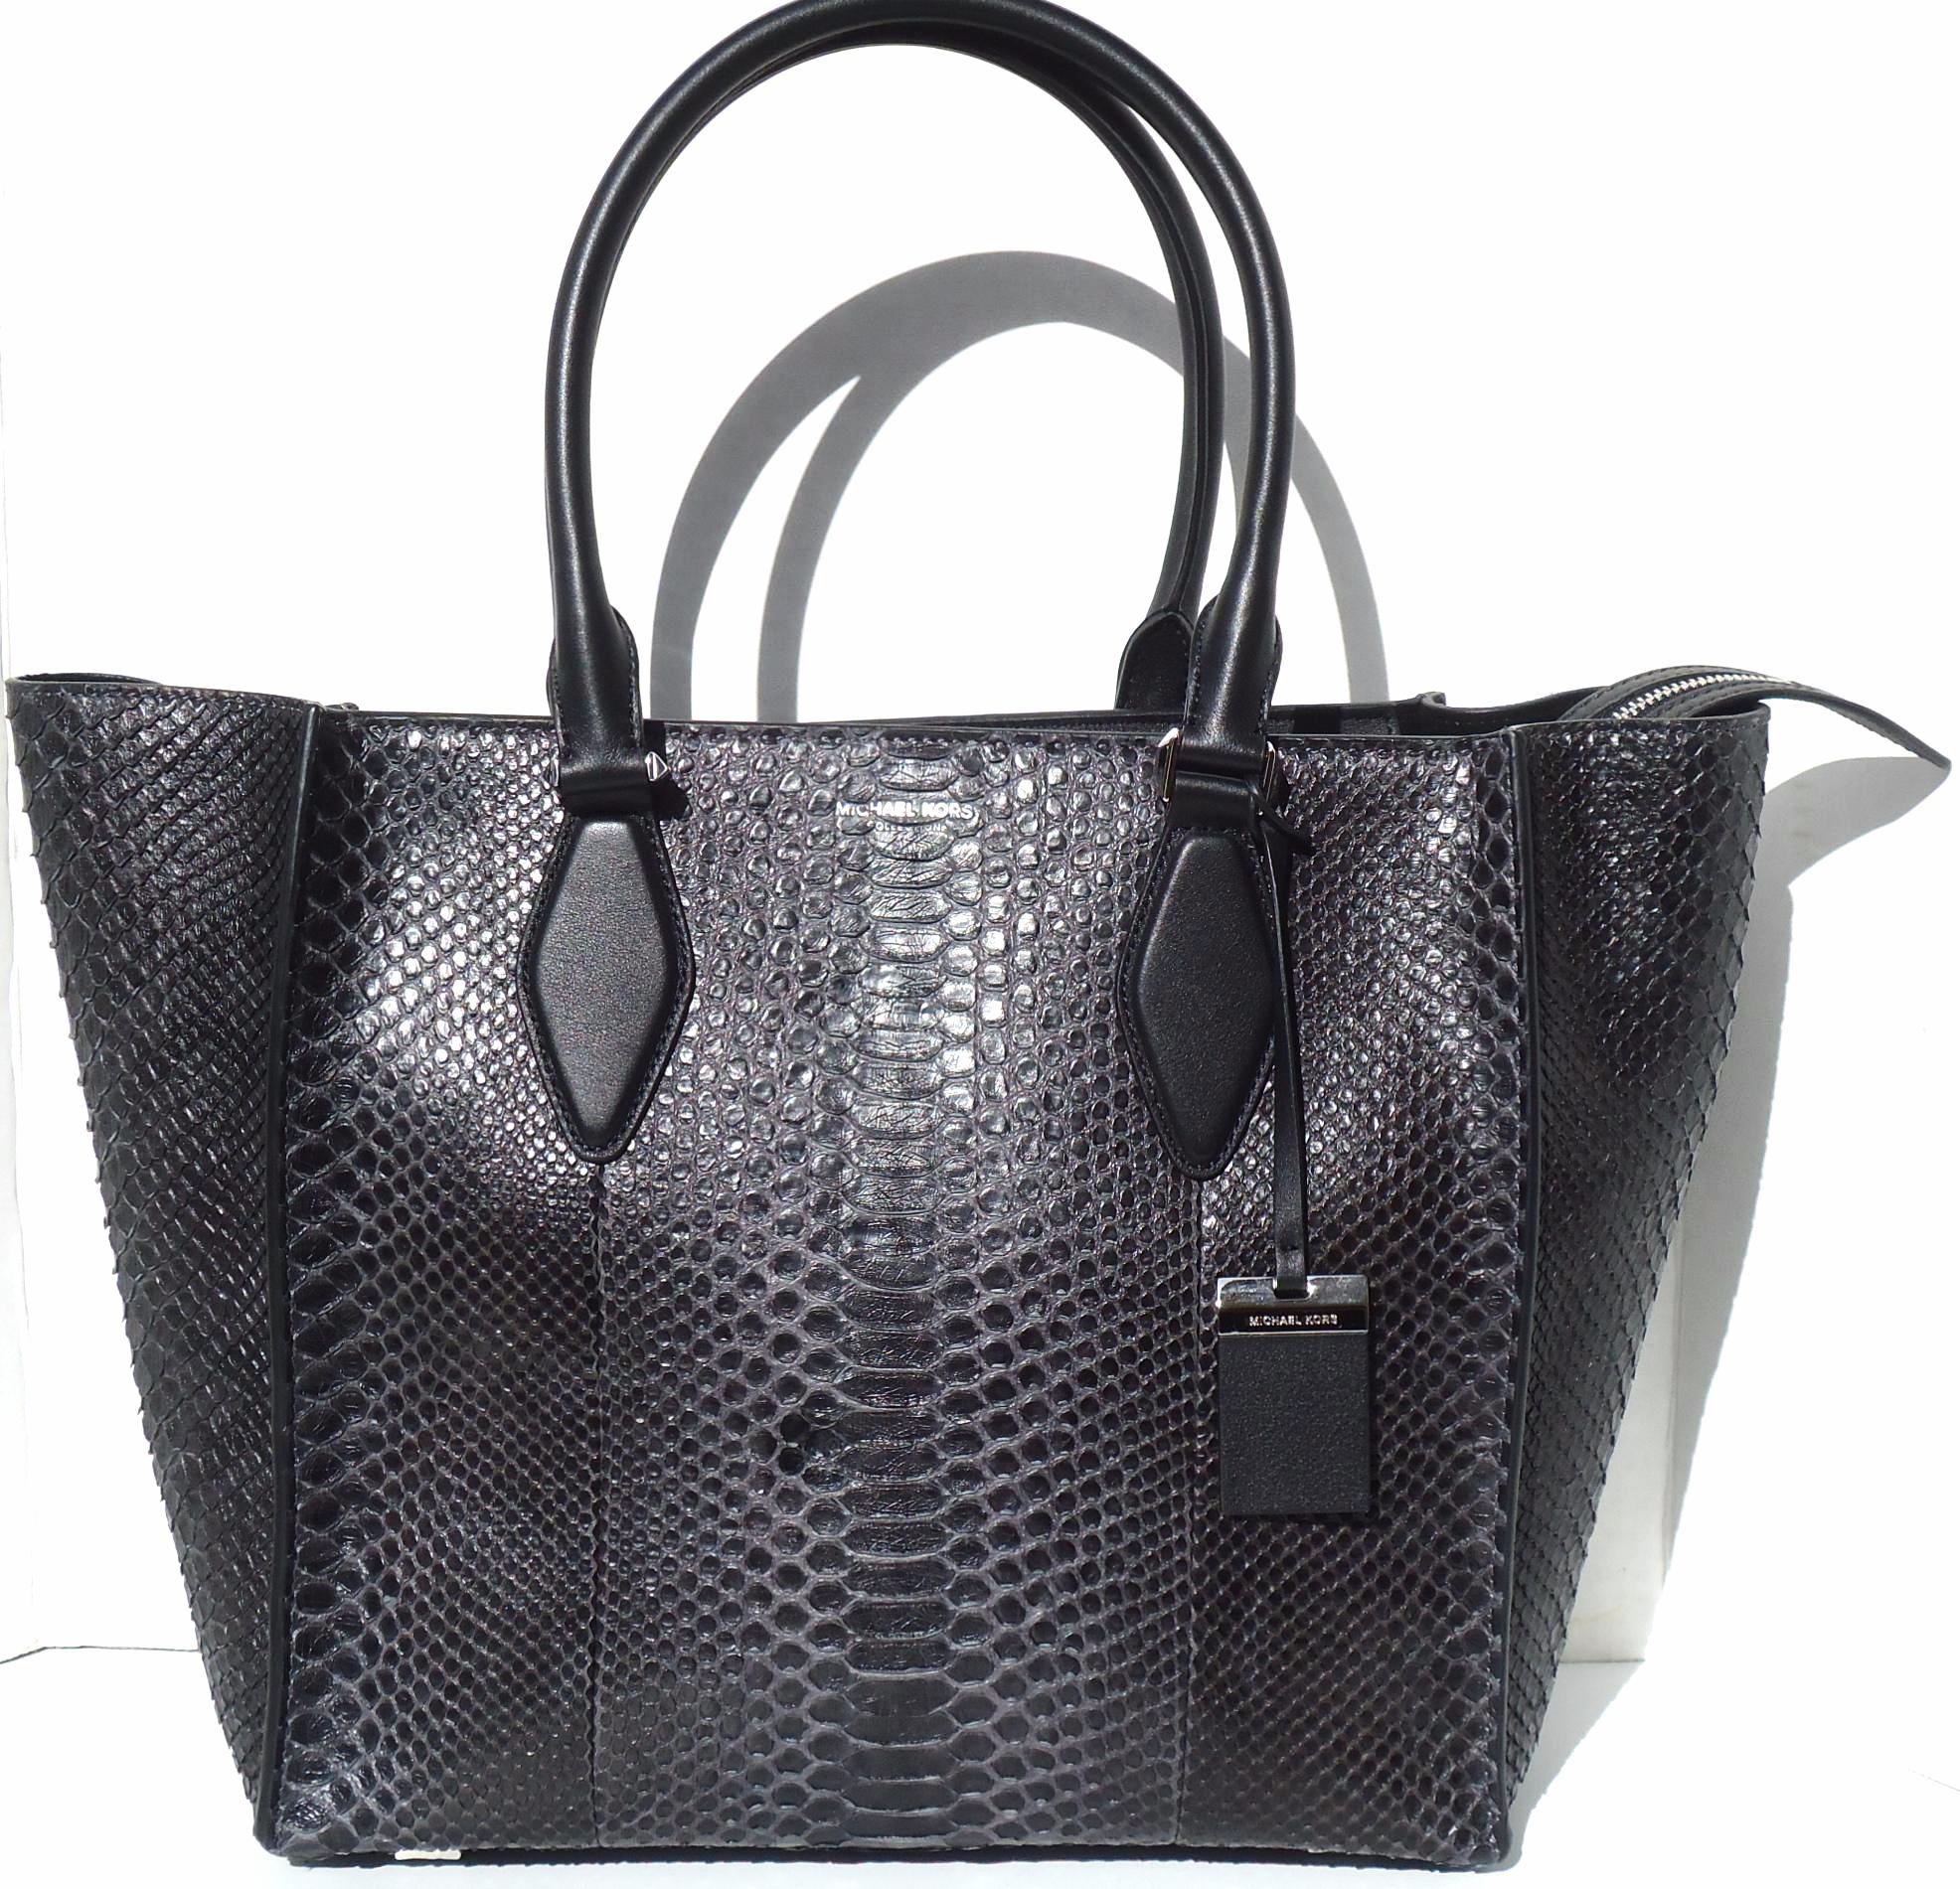  Michael Kors - Black / Women's Handbags, Purses